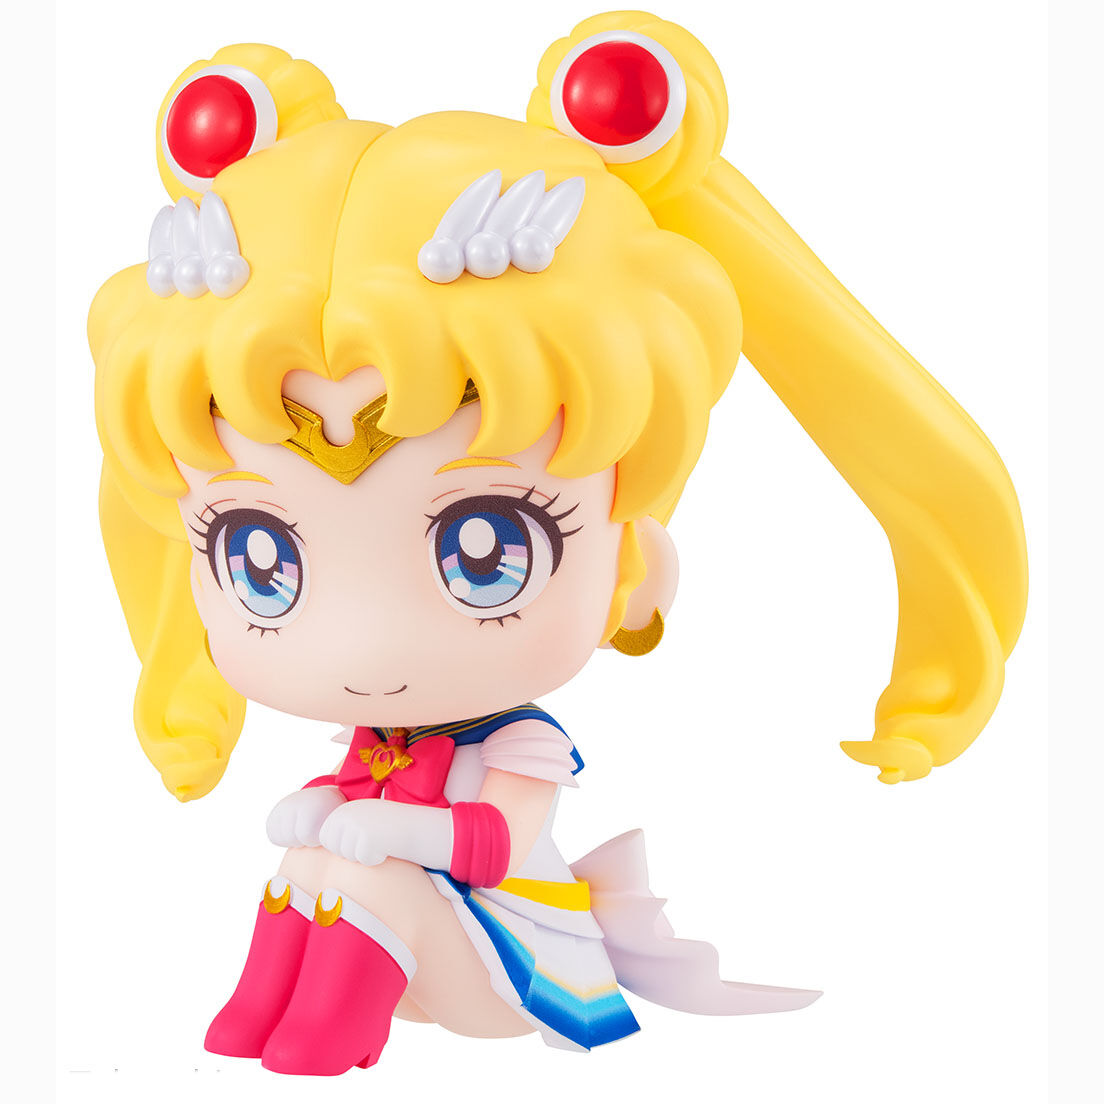 Figurine Sailor Moon Pretty Guardian Lookup Super Sailor Moon 11cm